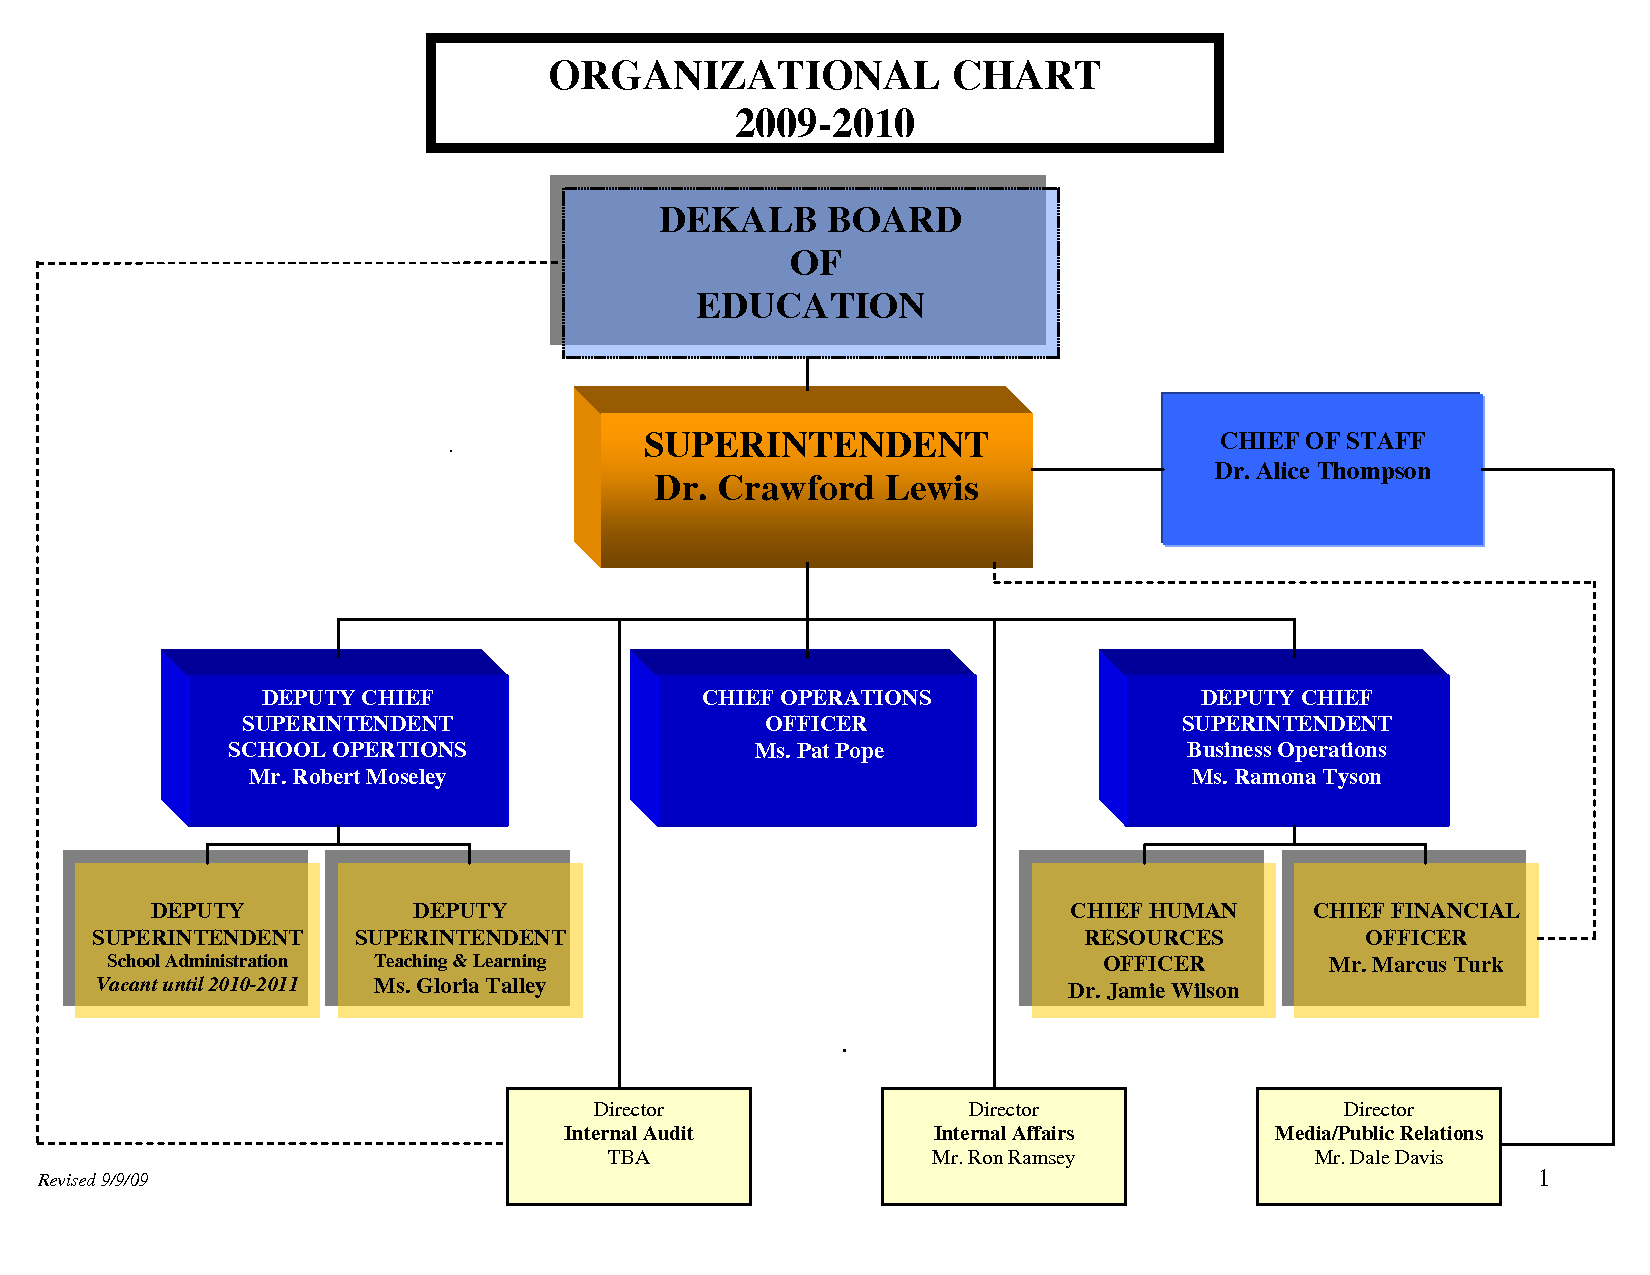 Organizational Chart Template Word | E Commercewordpress Inside Organization Chart Template Word